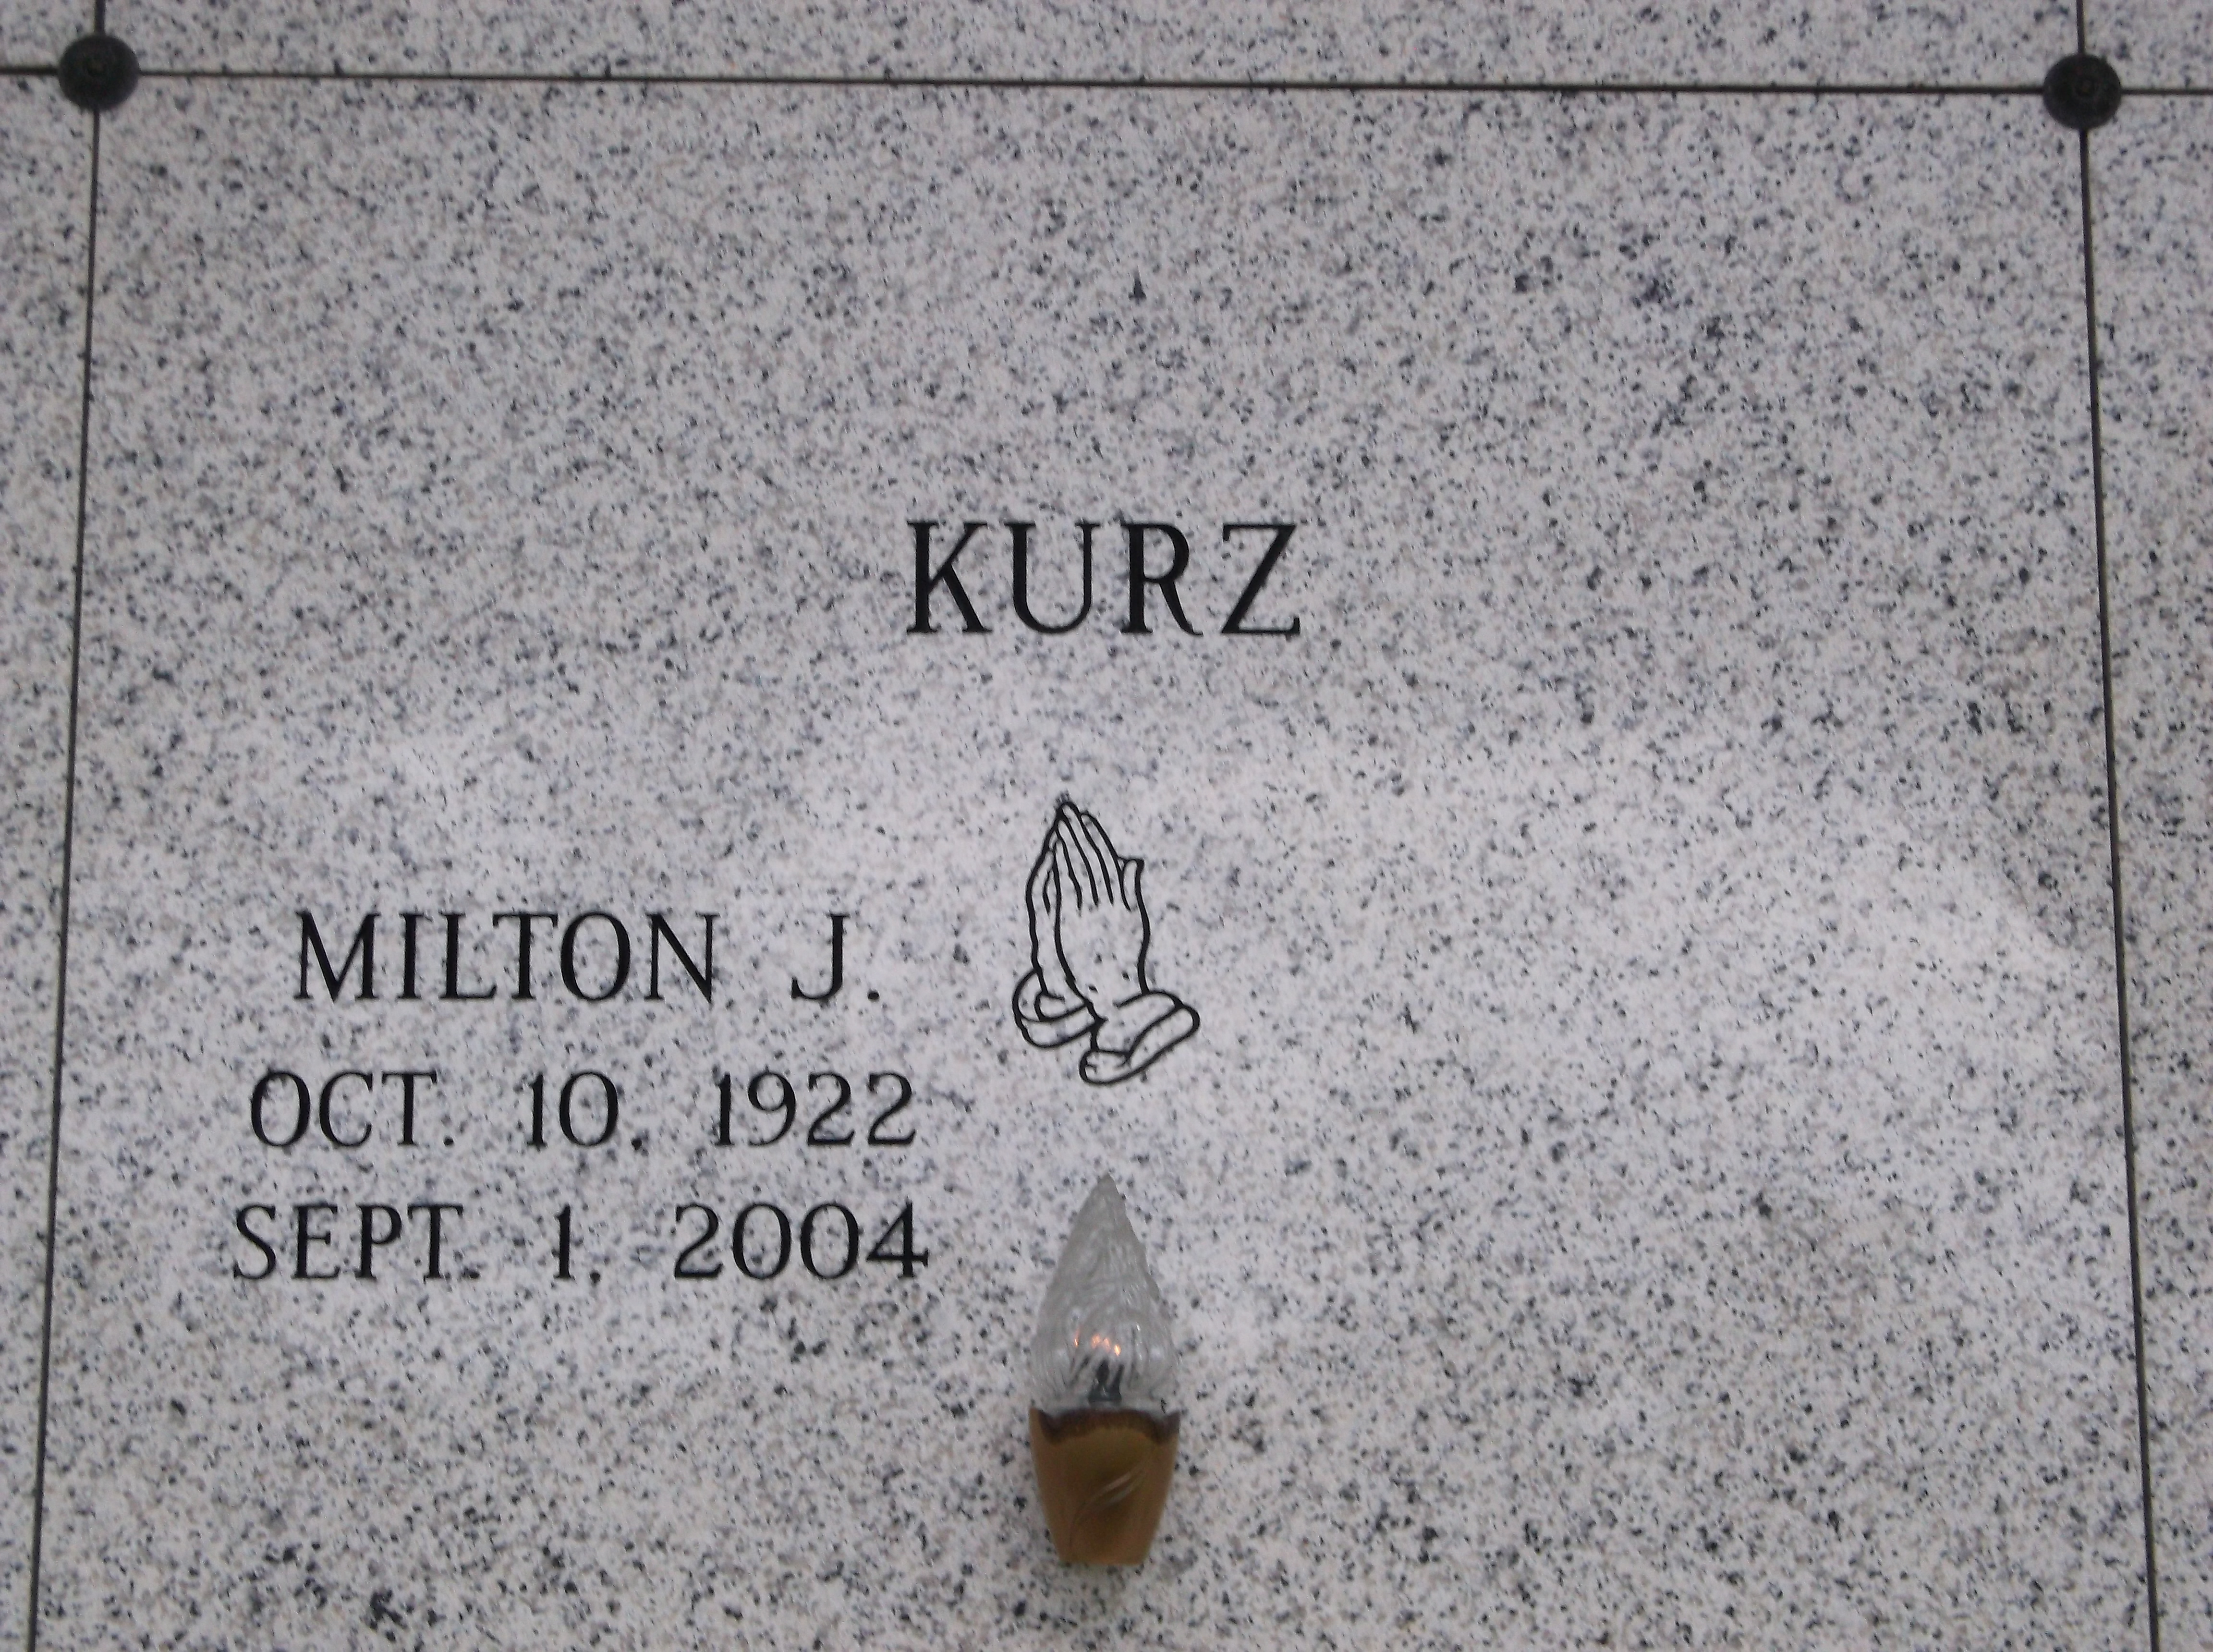 Milton J Kurz